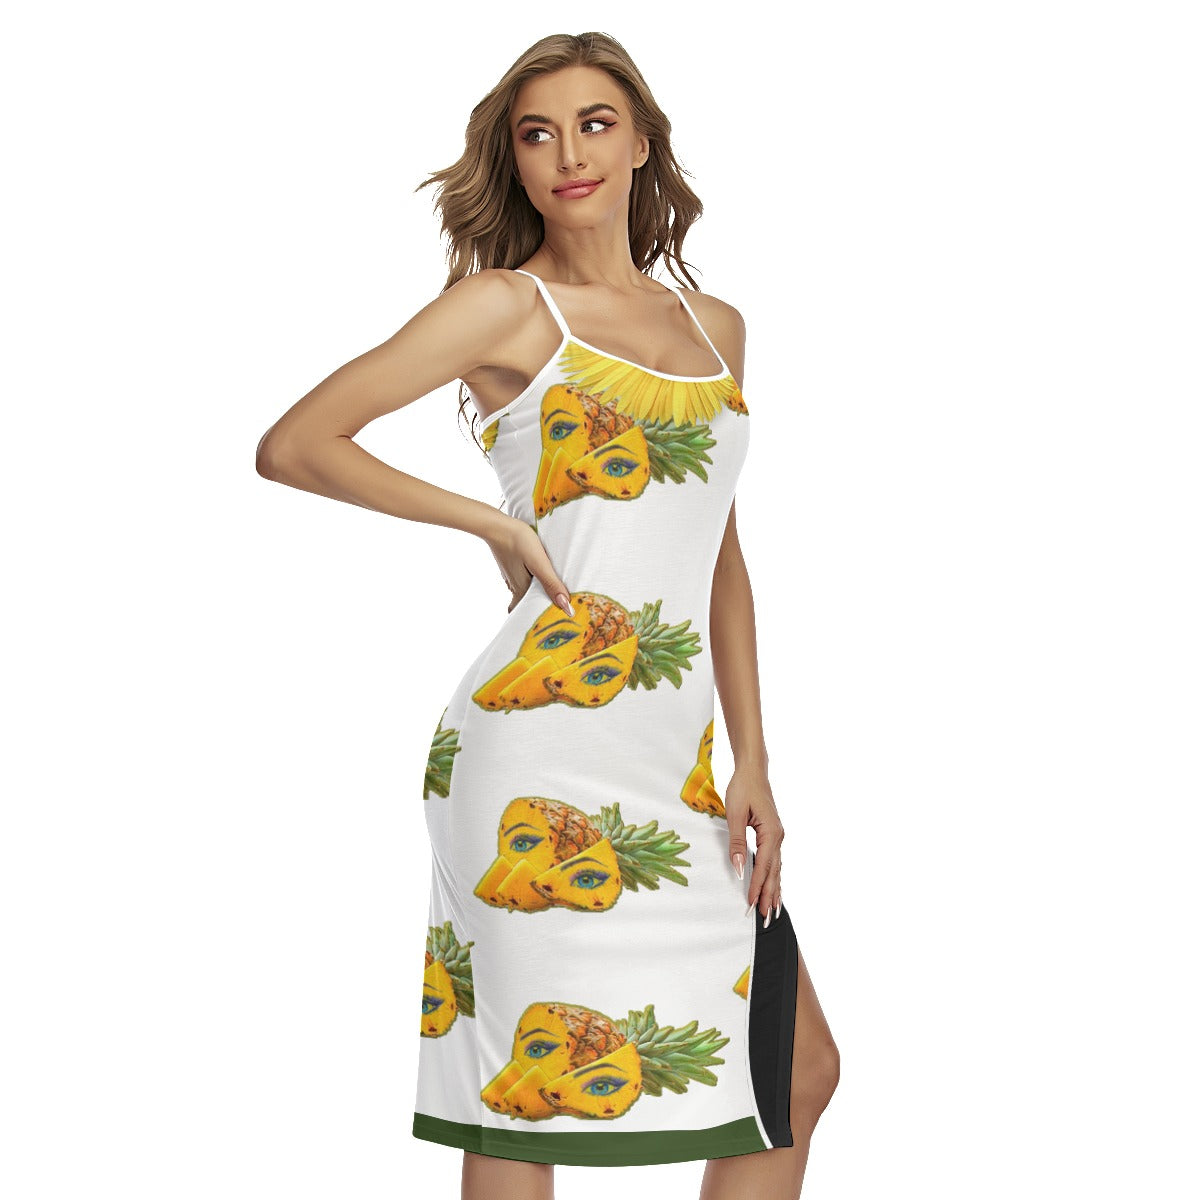 Xcarii Xii Pineapple Back Cross Cami Dress (REGULAR)